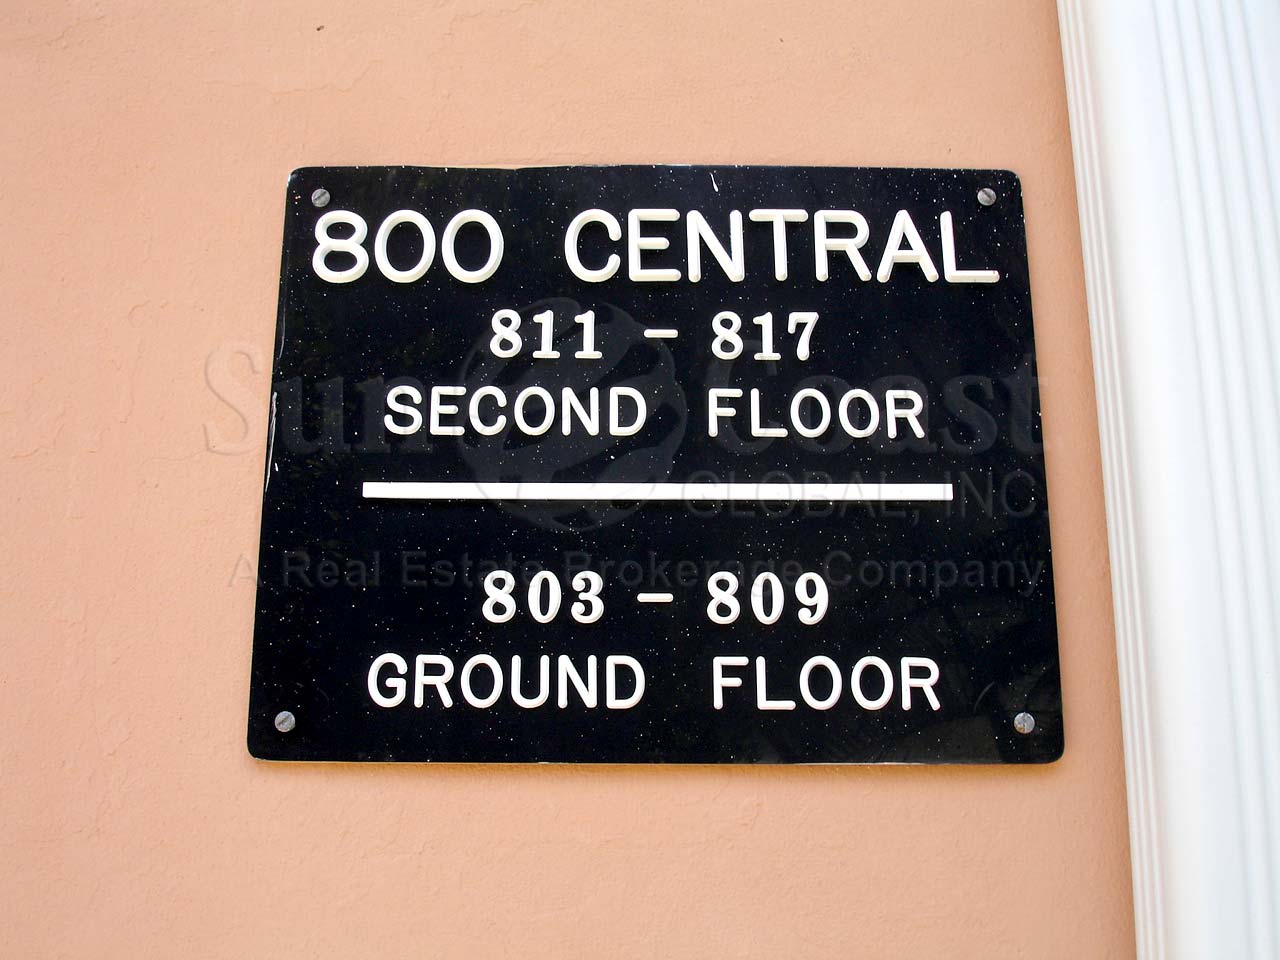 800 Central Club Signage